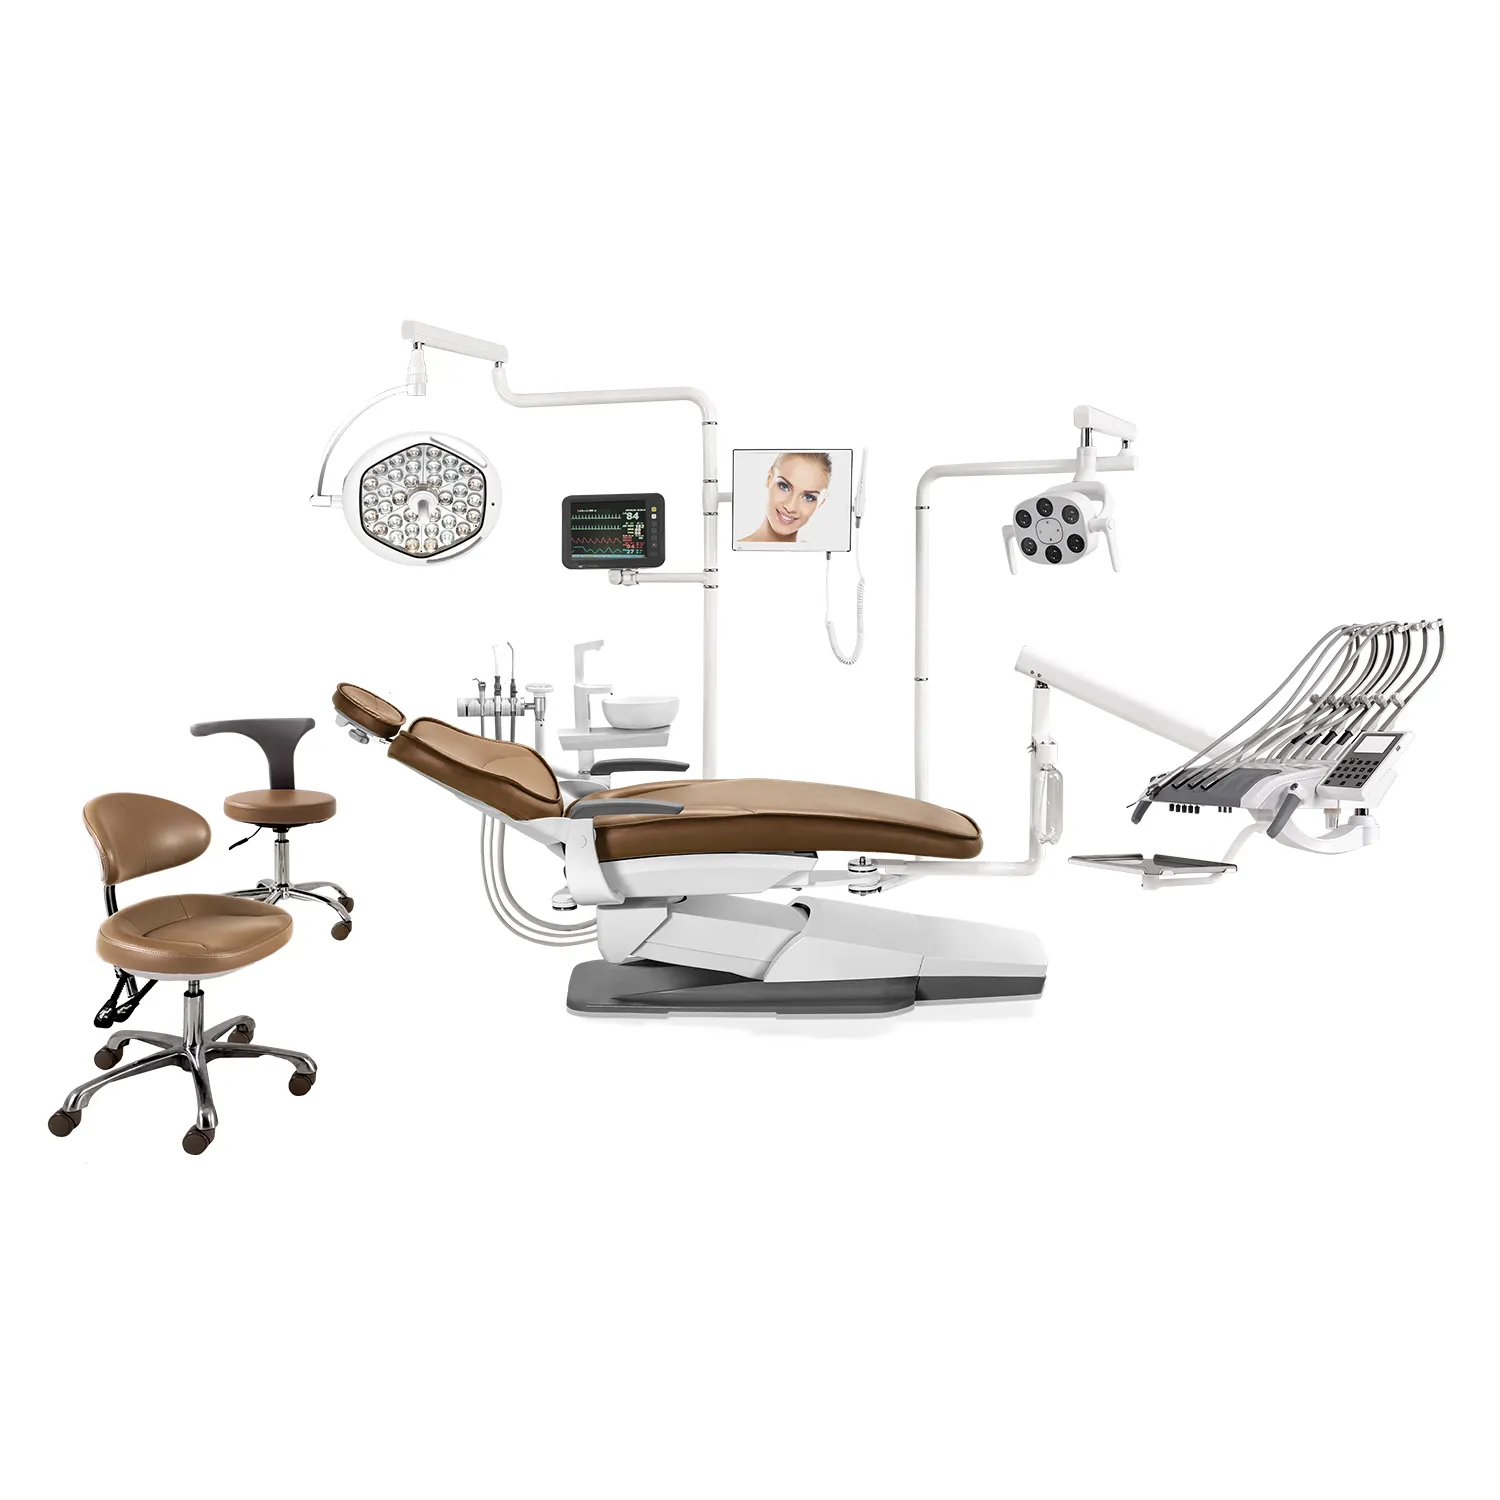 FOINOE luxury best foshan guangdong dental unit chair set completo di alta qualità poltrona odontoiatrica in vendita